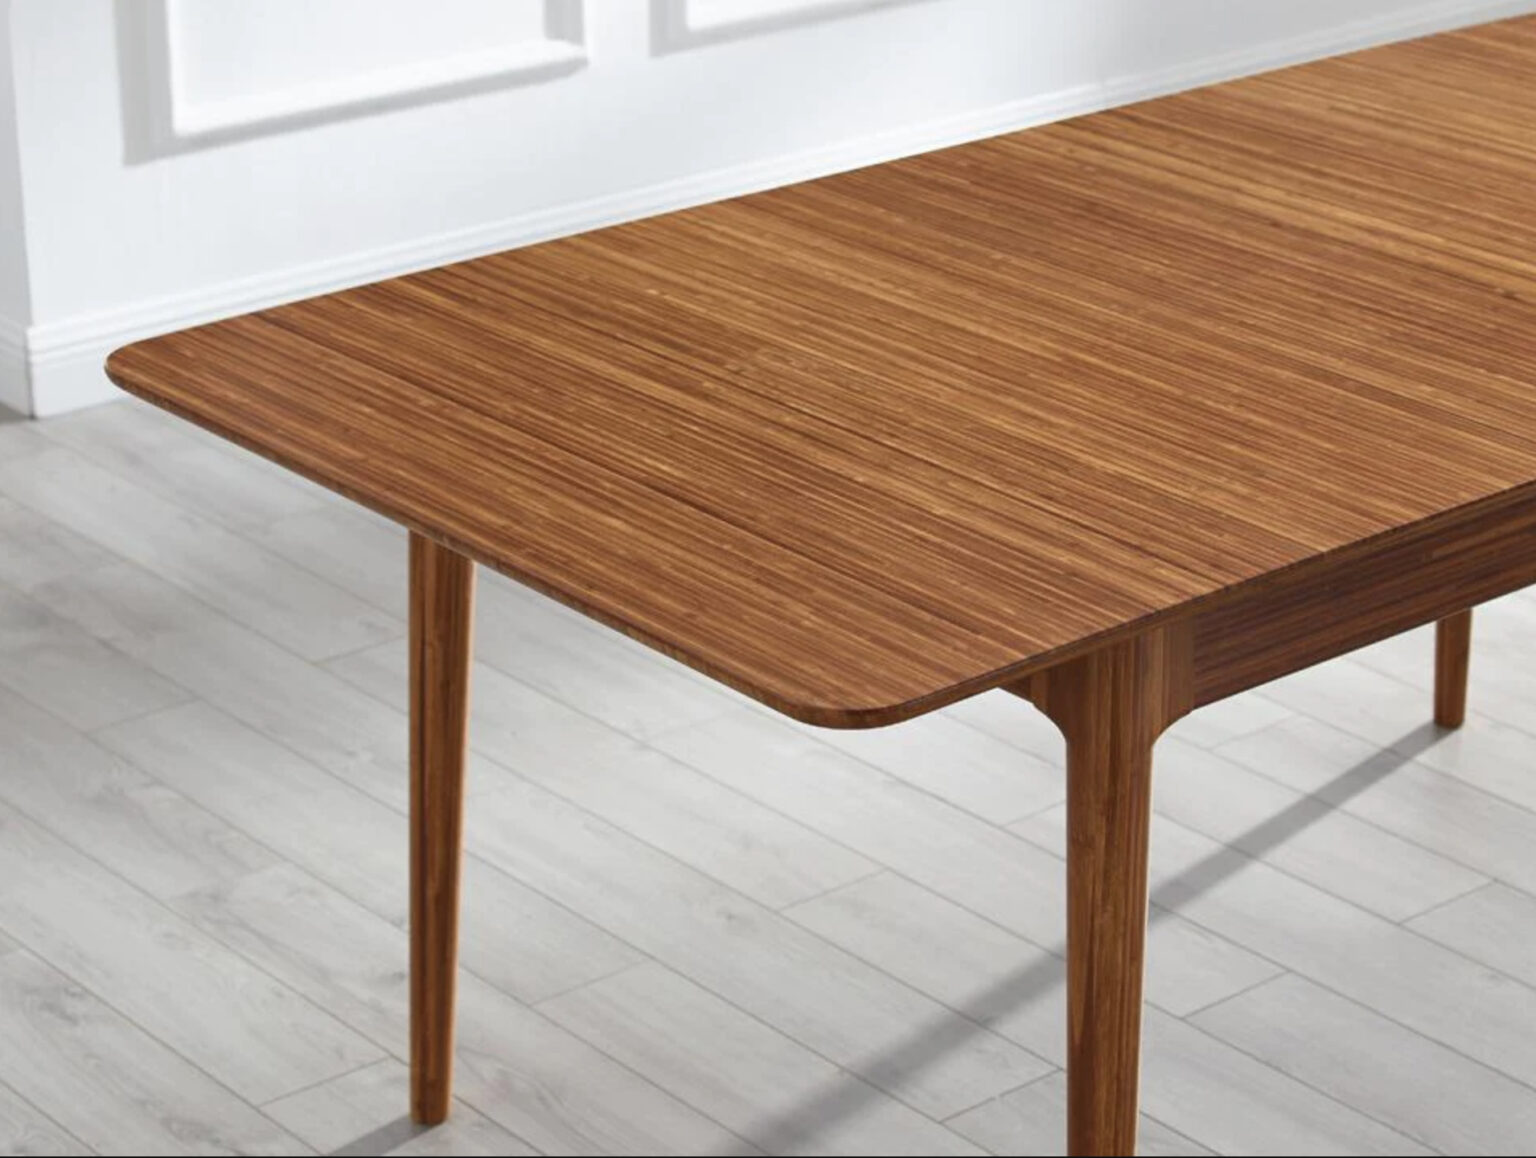 Mija-extendable-dining-table-amber-bamboo-table-top-detail_greenington